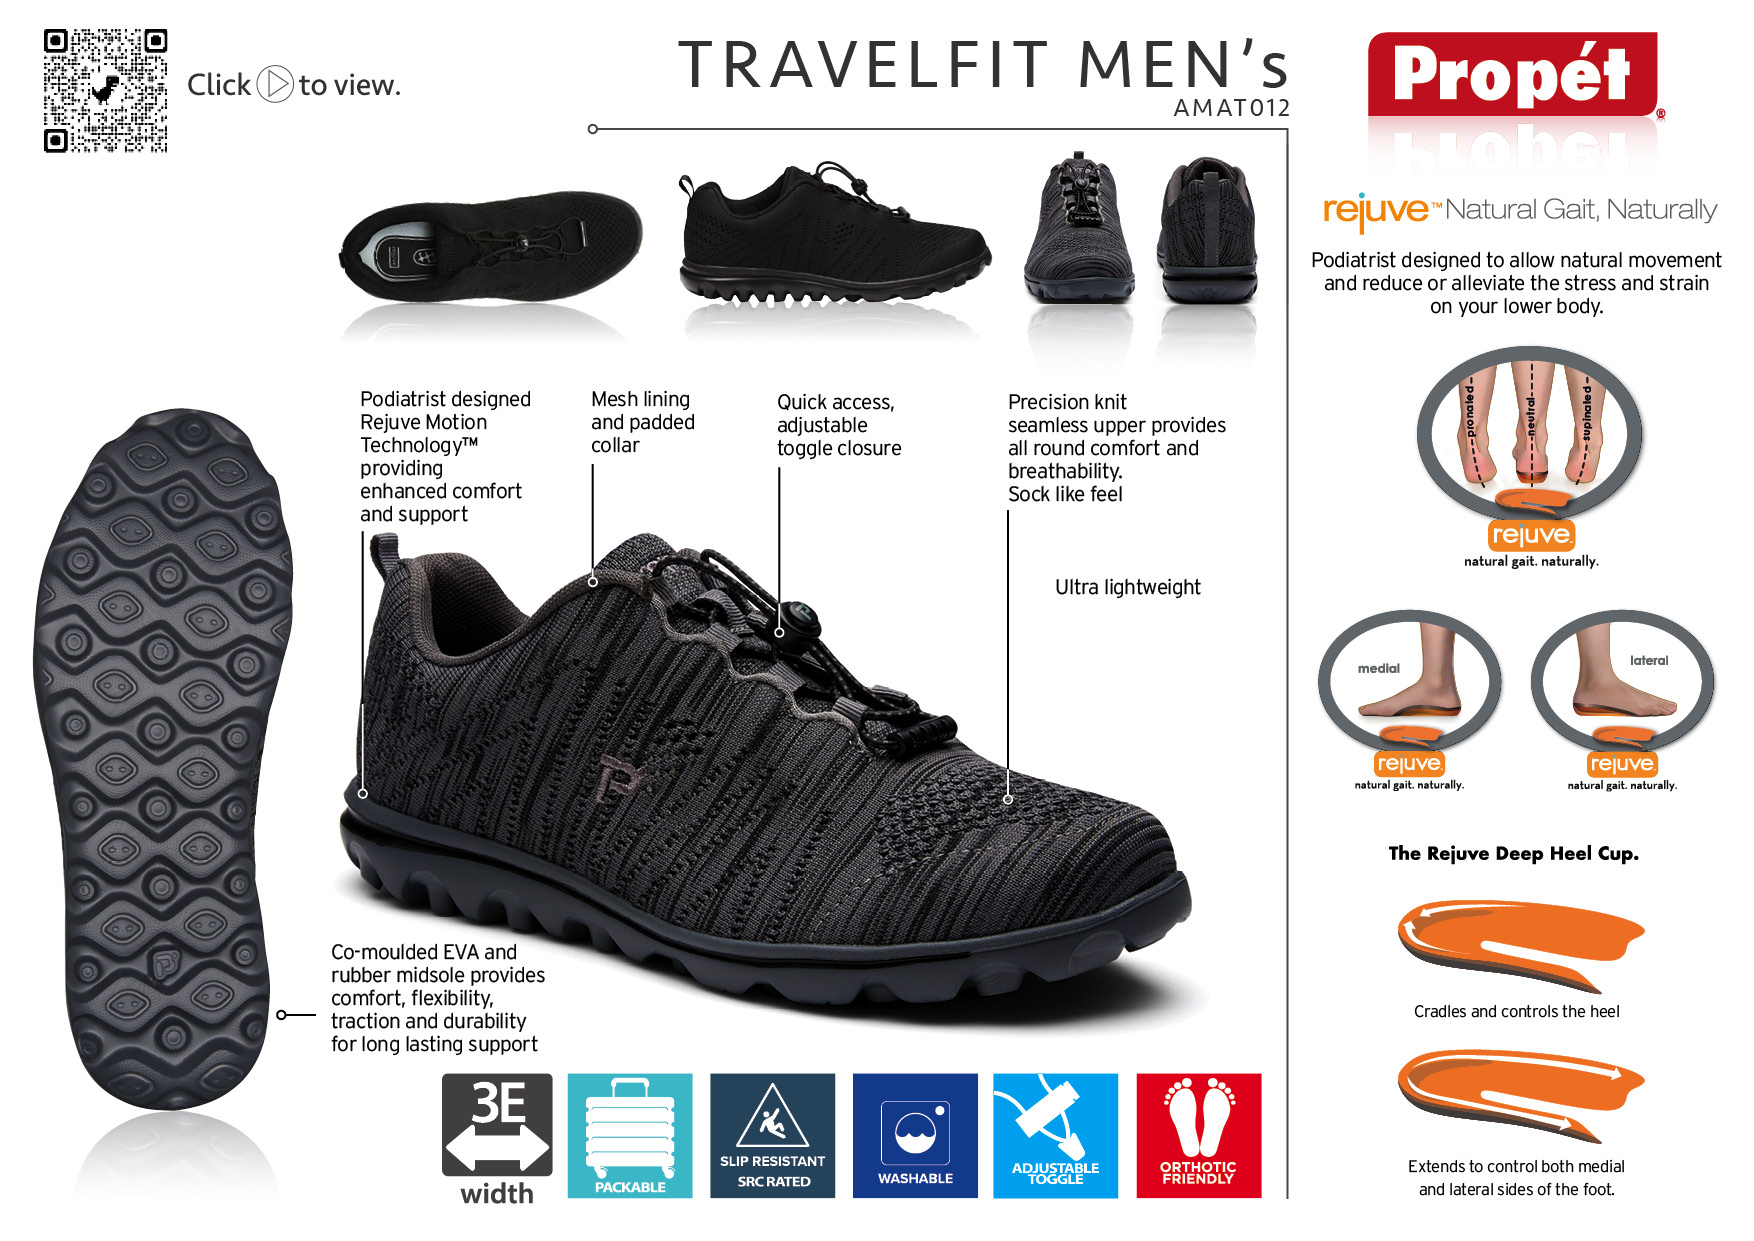 TravelFit Men's AMAT012 Shoe Information Sheet